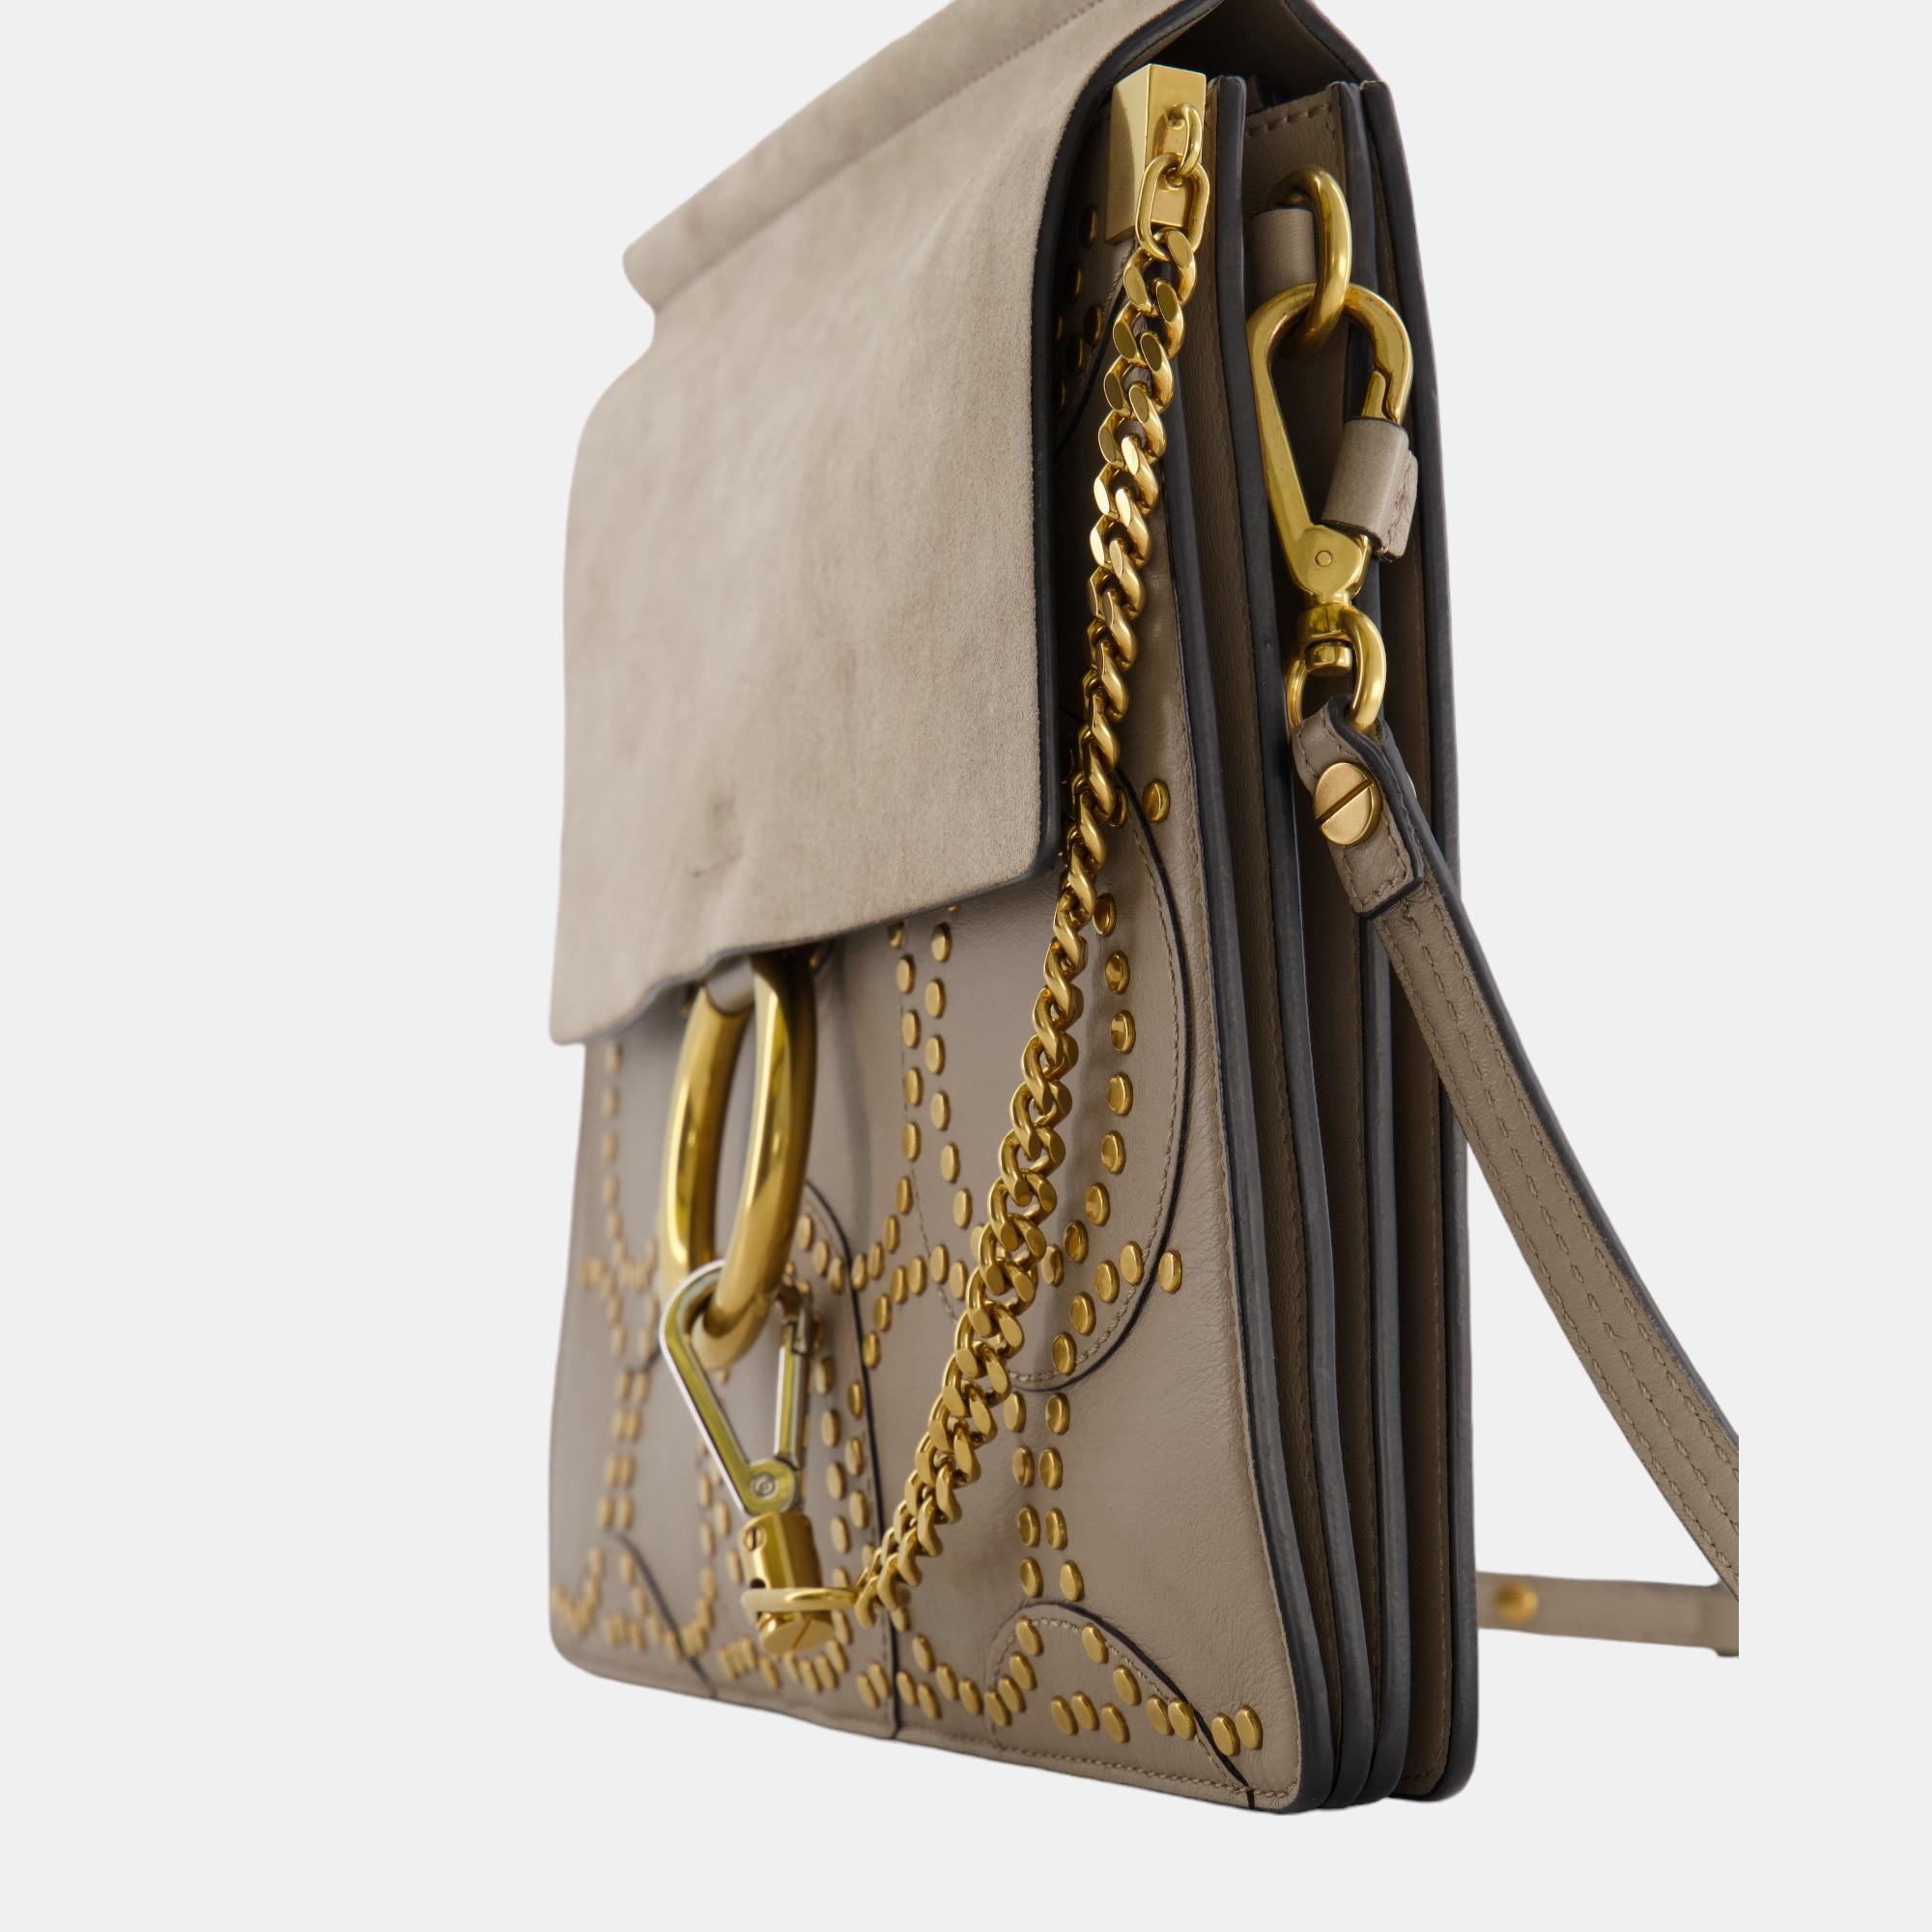 Chloe Beige Suede Leather Studded Faye Shoulder Bag With Gold Hardware